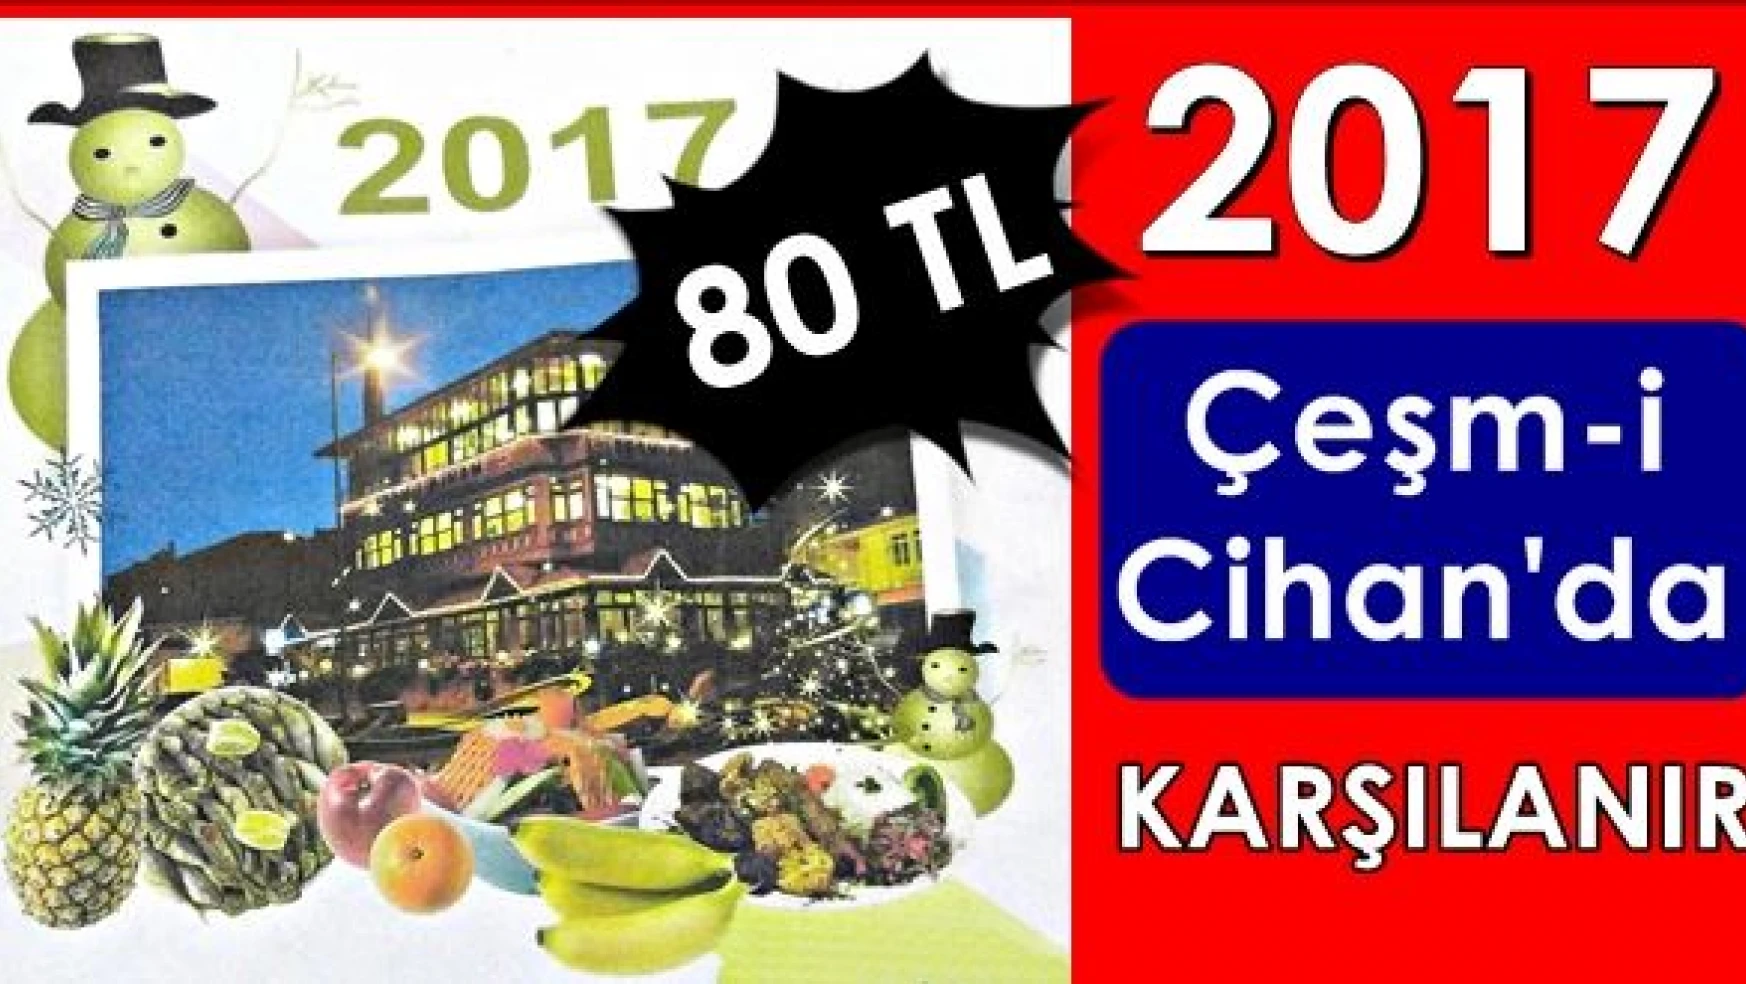 2017'yi Çeşm-i Cihan'da karşılayın